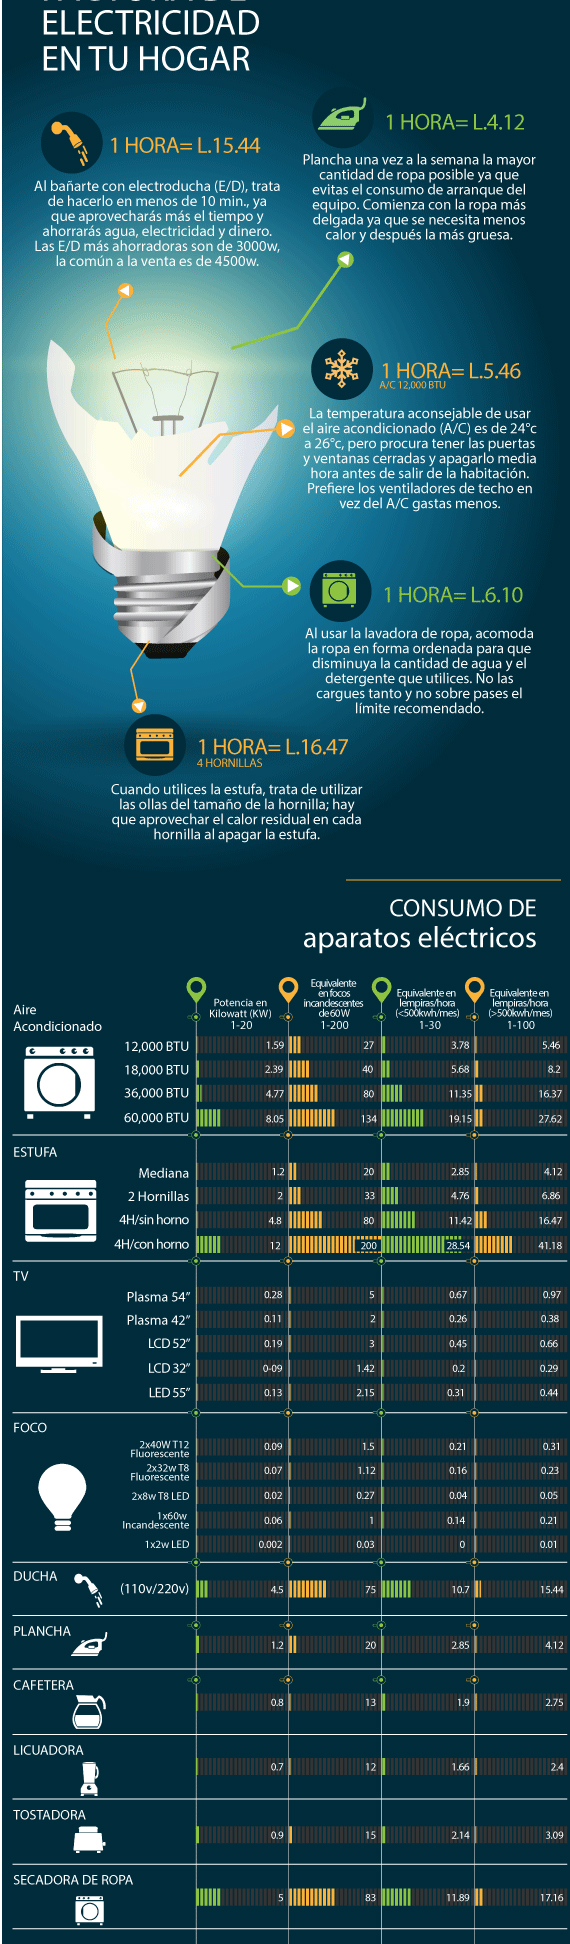 infografia ahorro de energia electrica